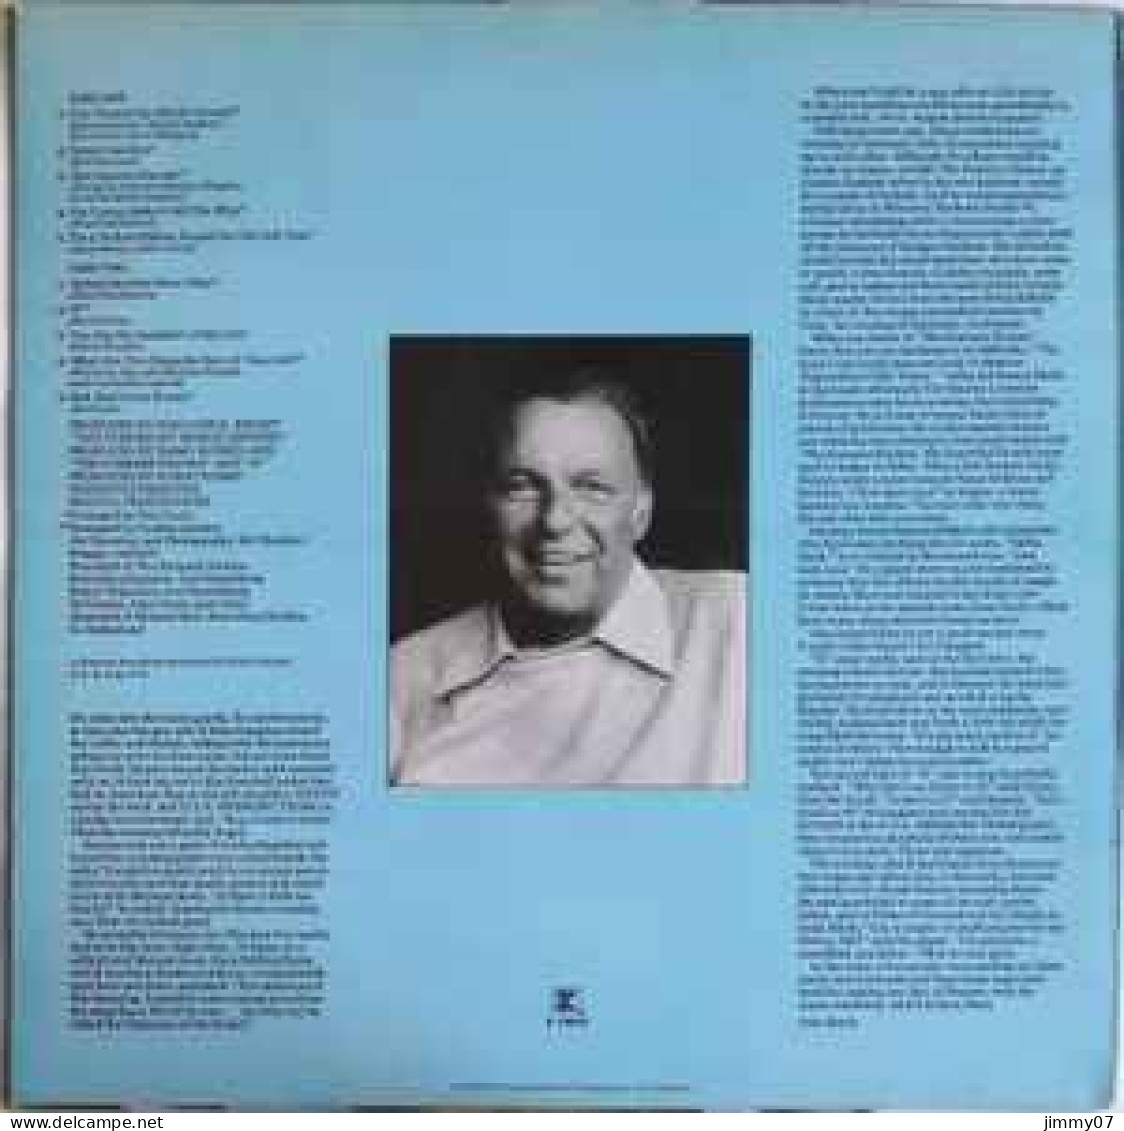 Frank Sinatra - Some Nice Things I've Missed (LP, Album) - Jazz